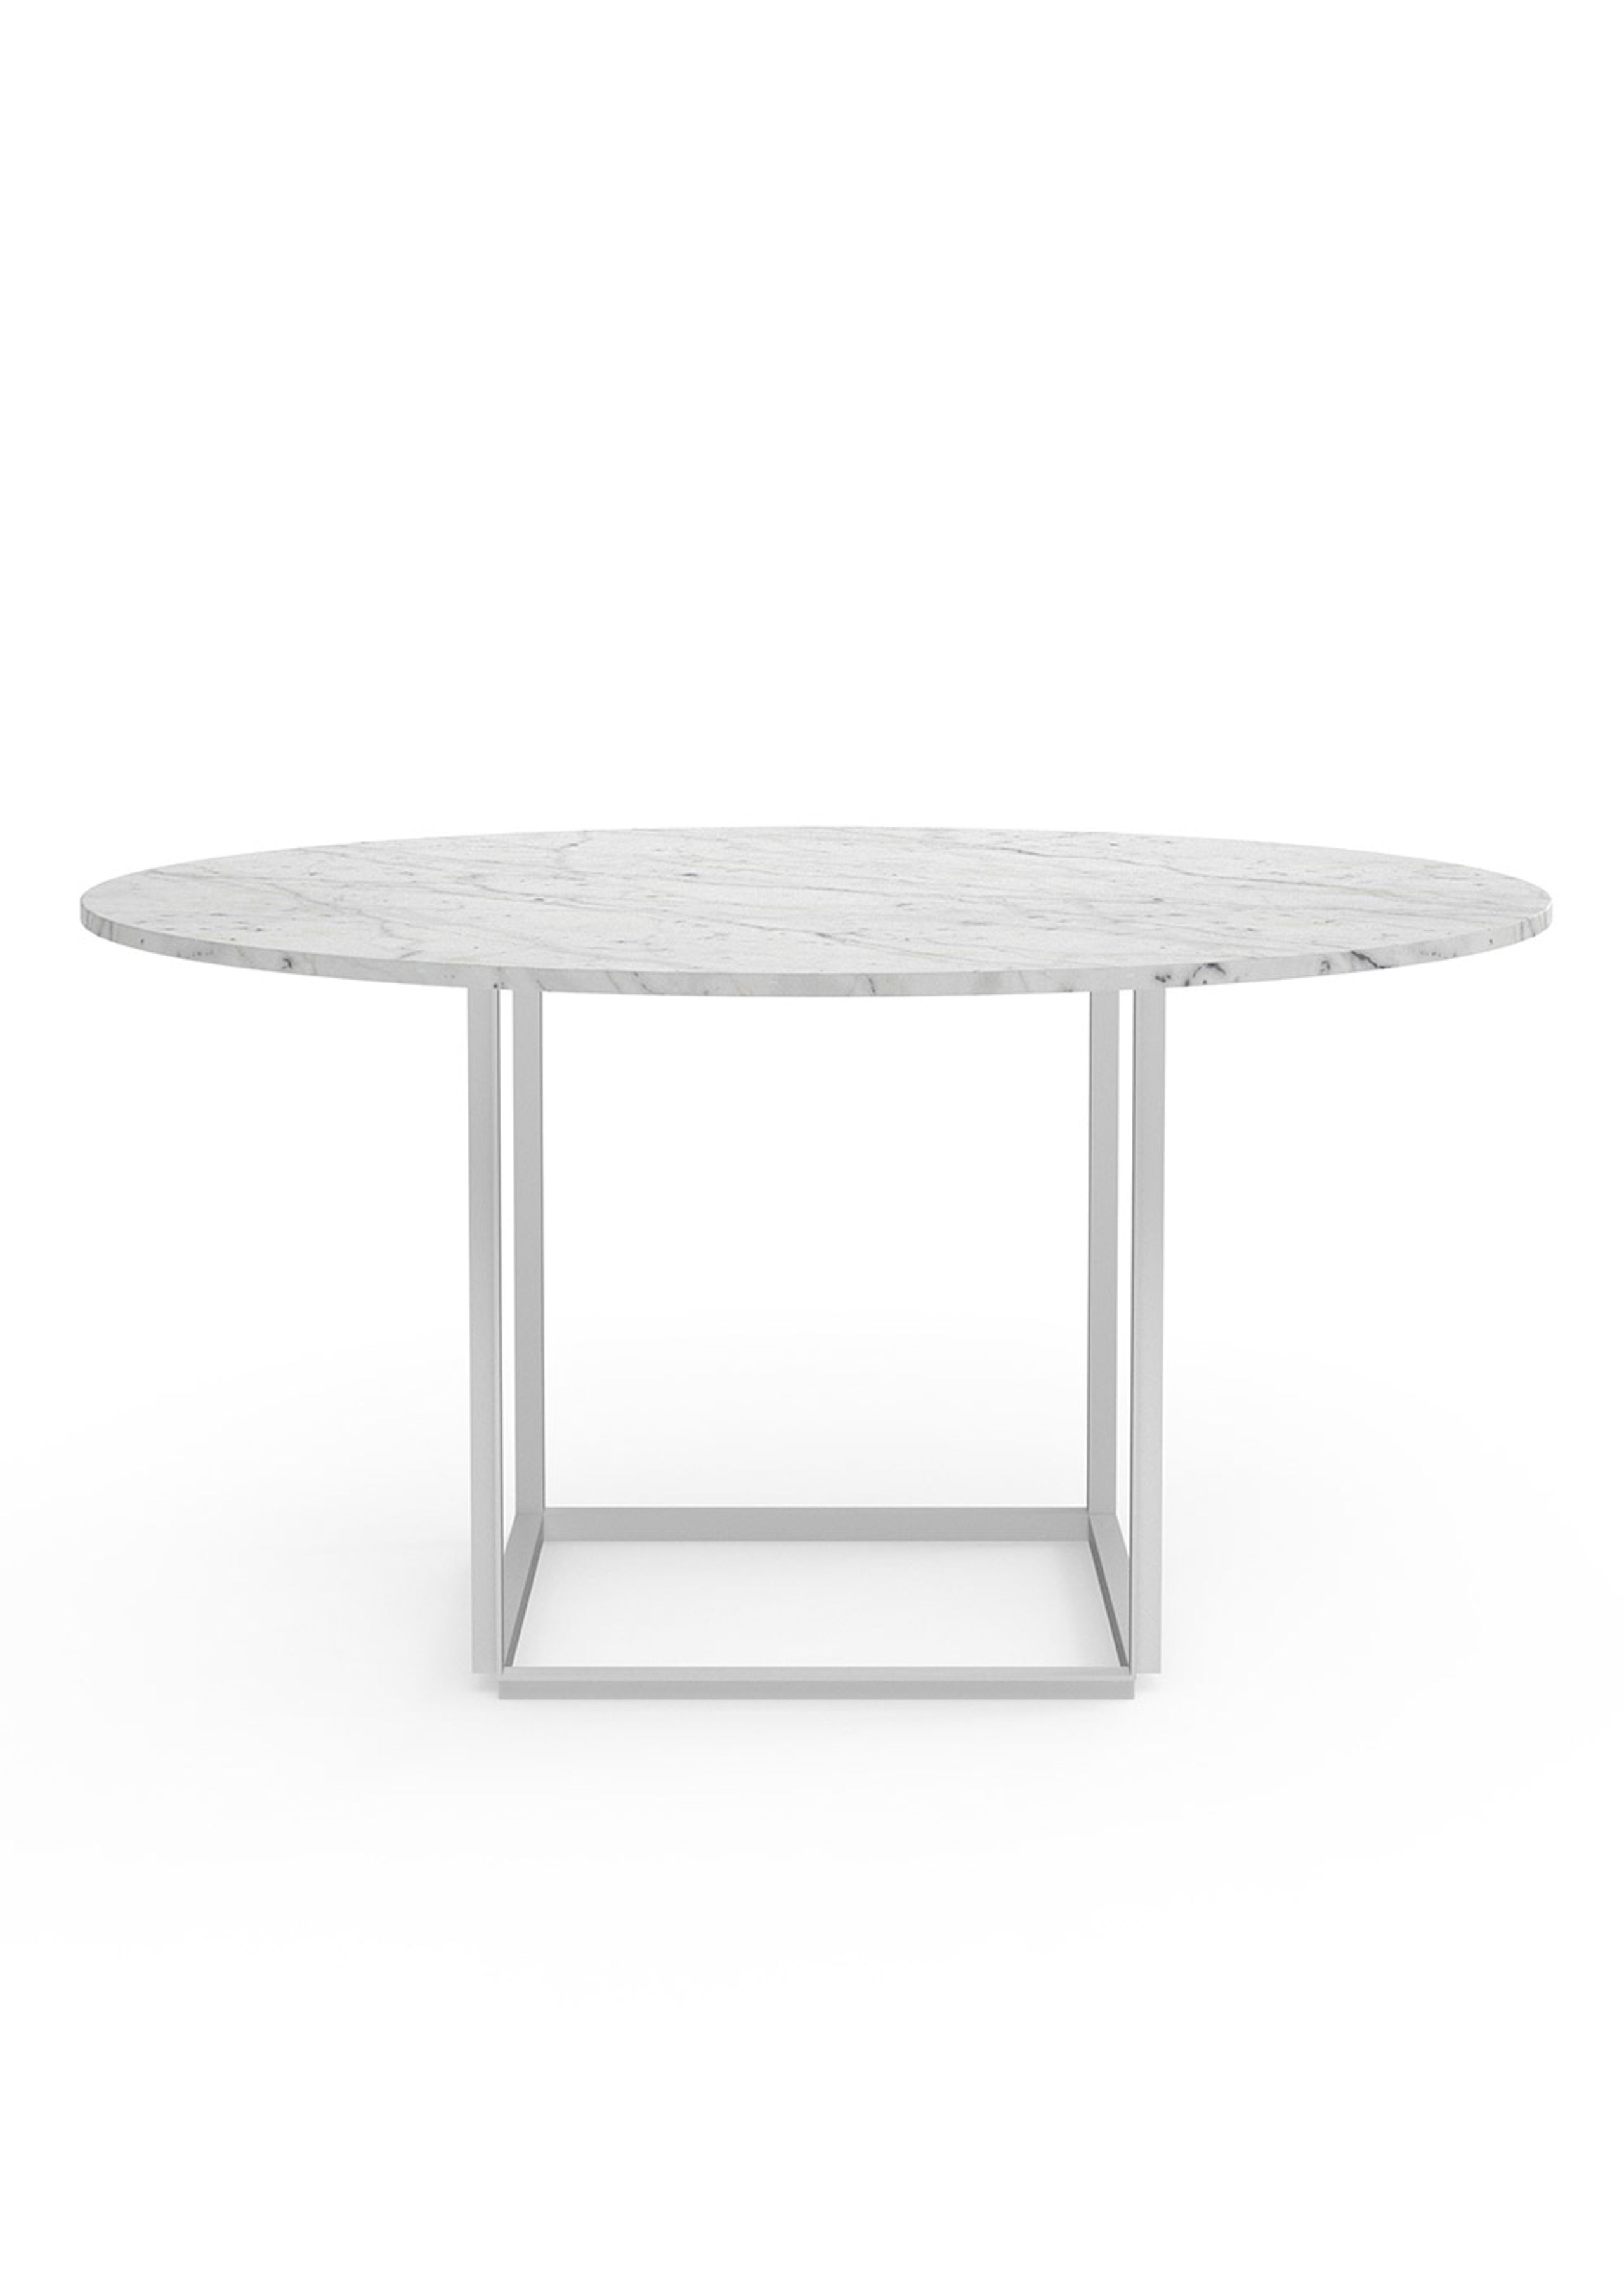 New Works - Spisebord - Florence Dining Table Ø145 - White Carrera Marble w. White Frame